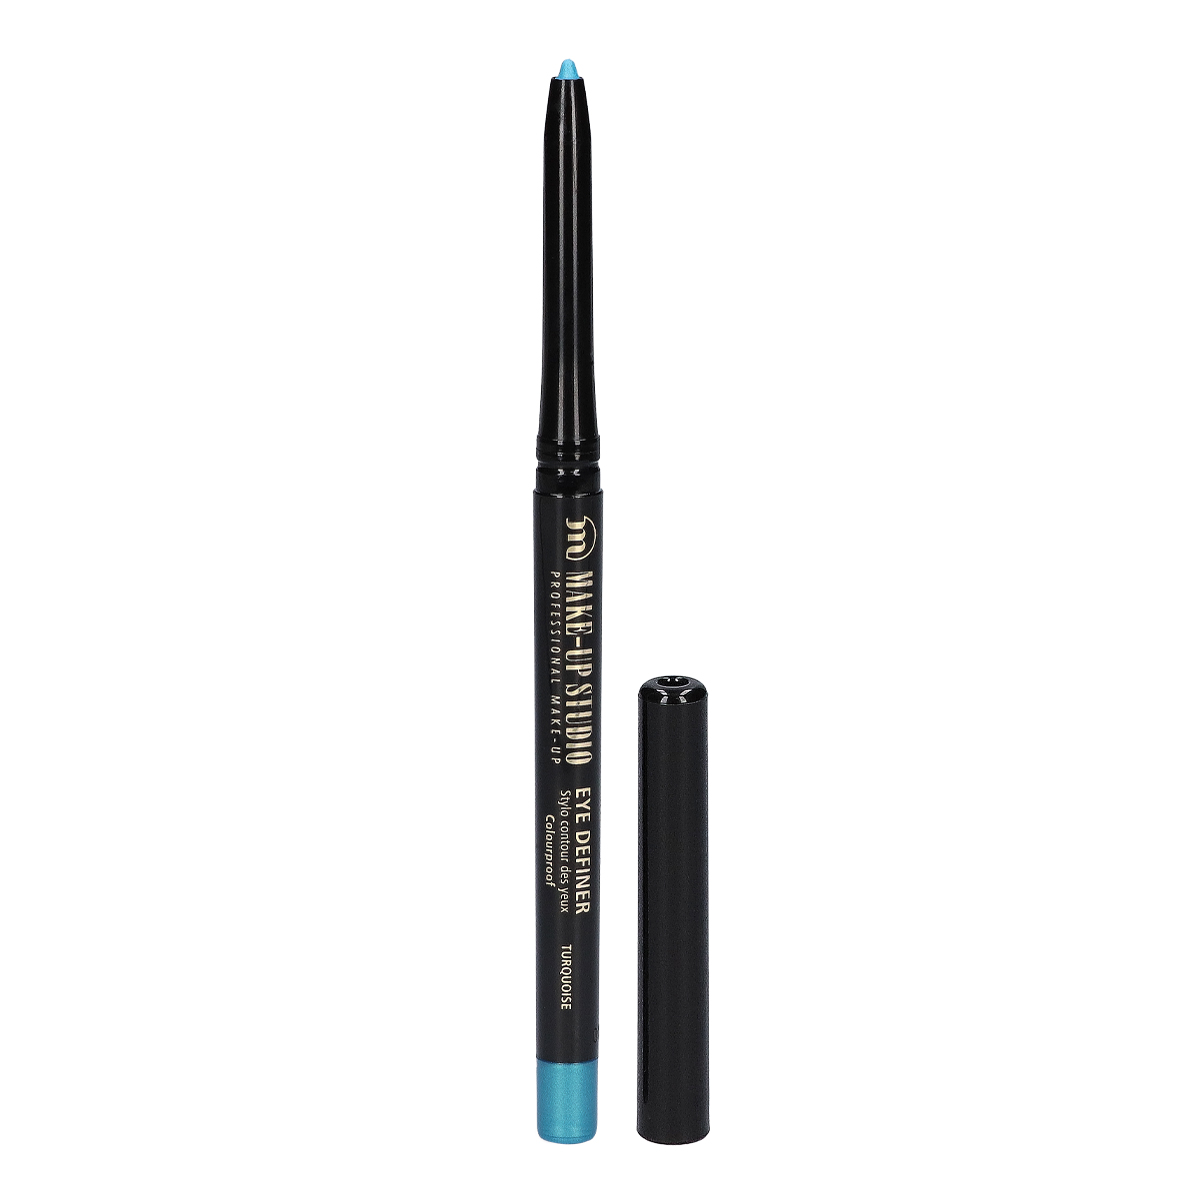 Make-up Studio Eye Definer Eyeliner - Turquoise